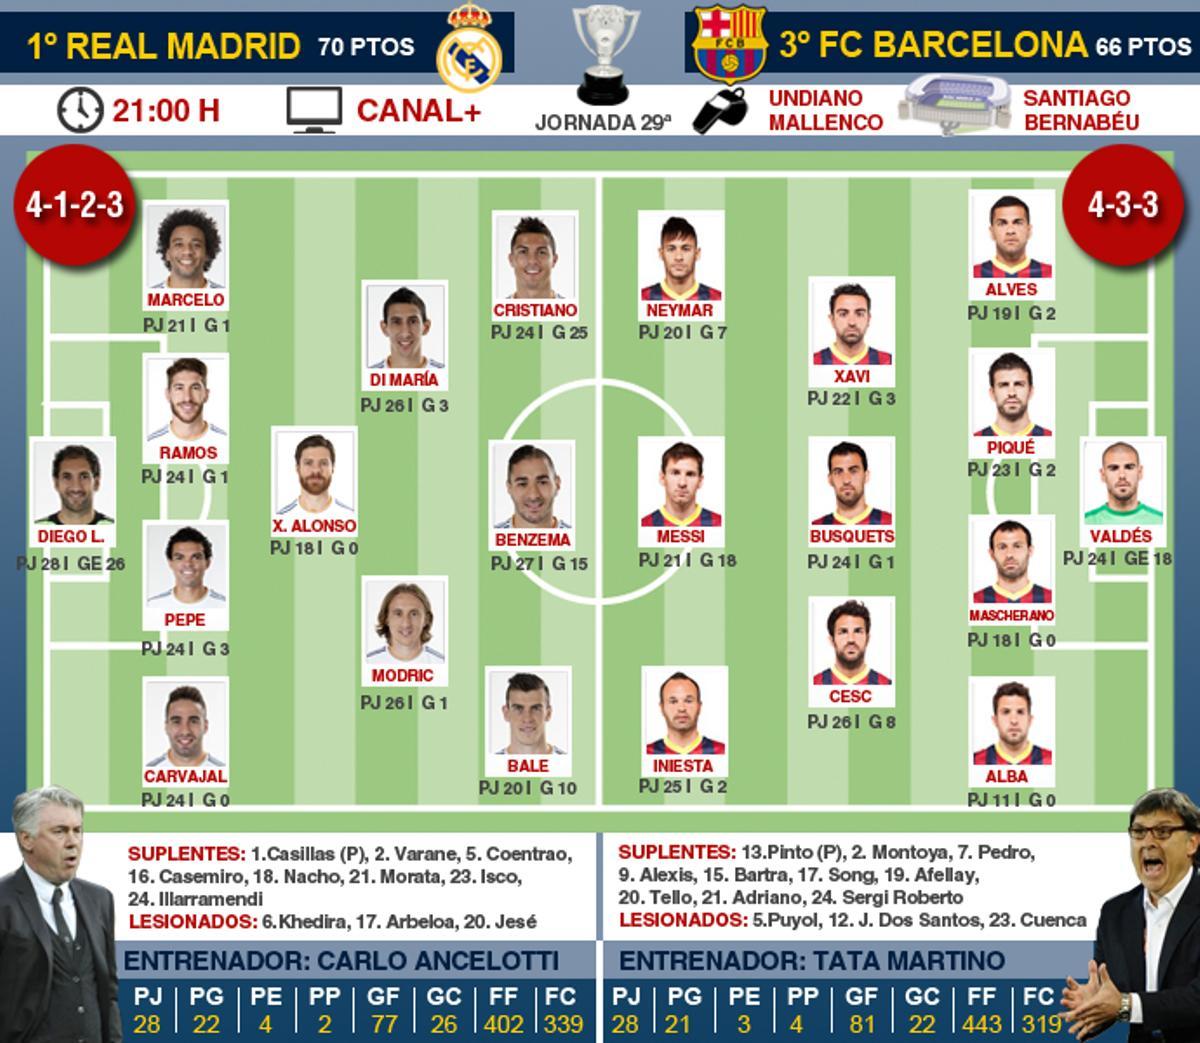 La previa del Real Madrid - FC Barcelona